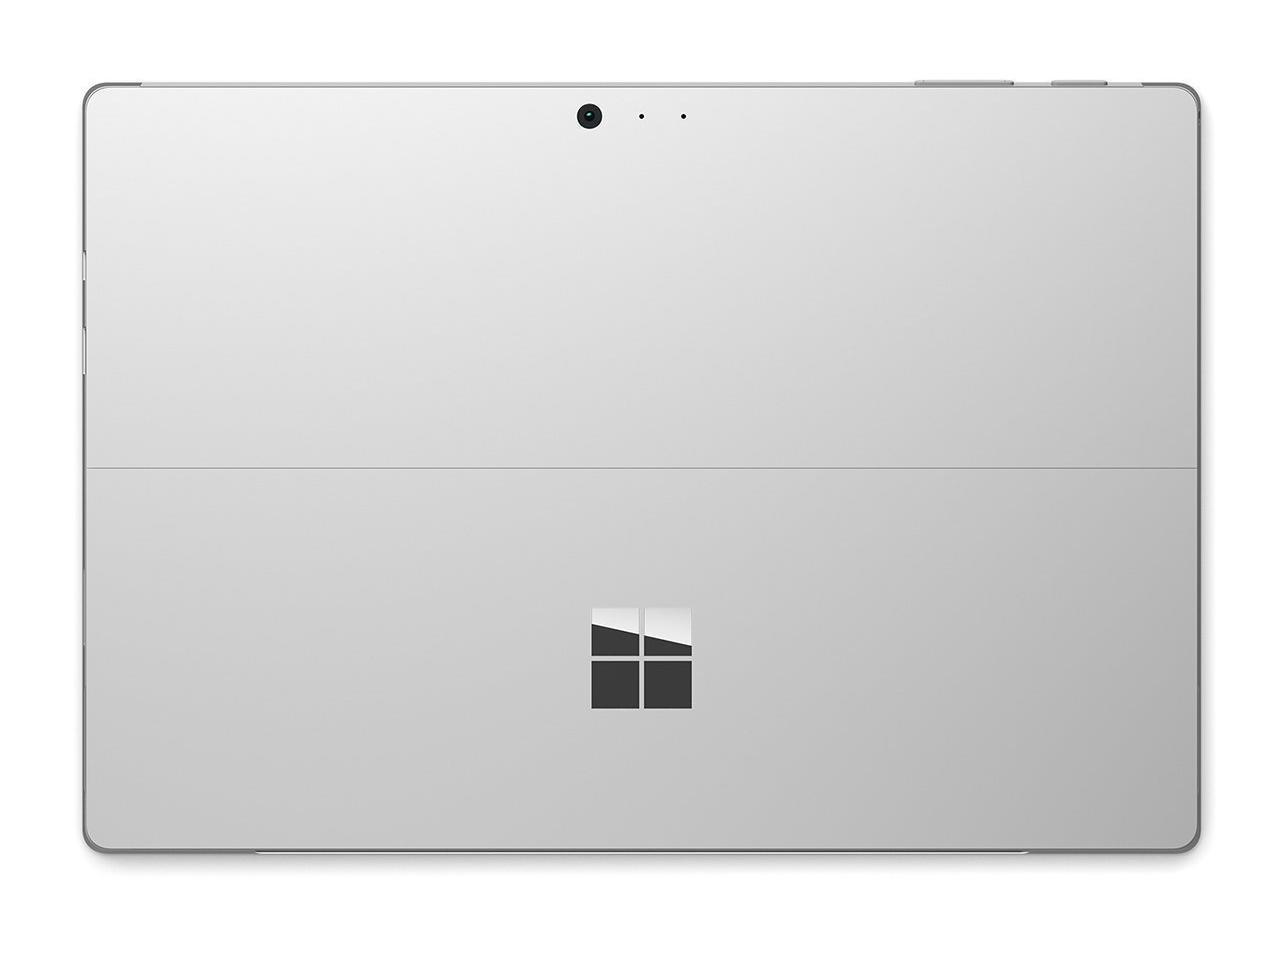 Microsoft Surface Pro 4 2-in-1 Laptop Intel Core i5-6300U 2.4 GHz 